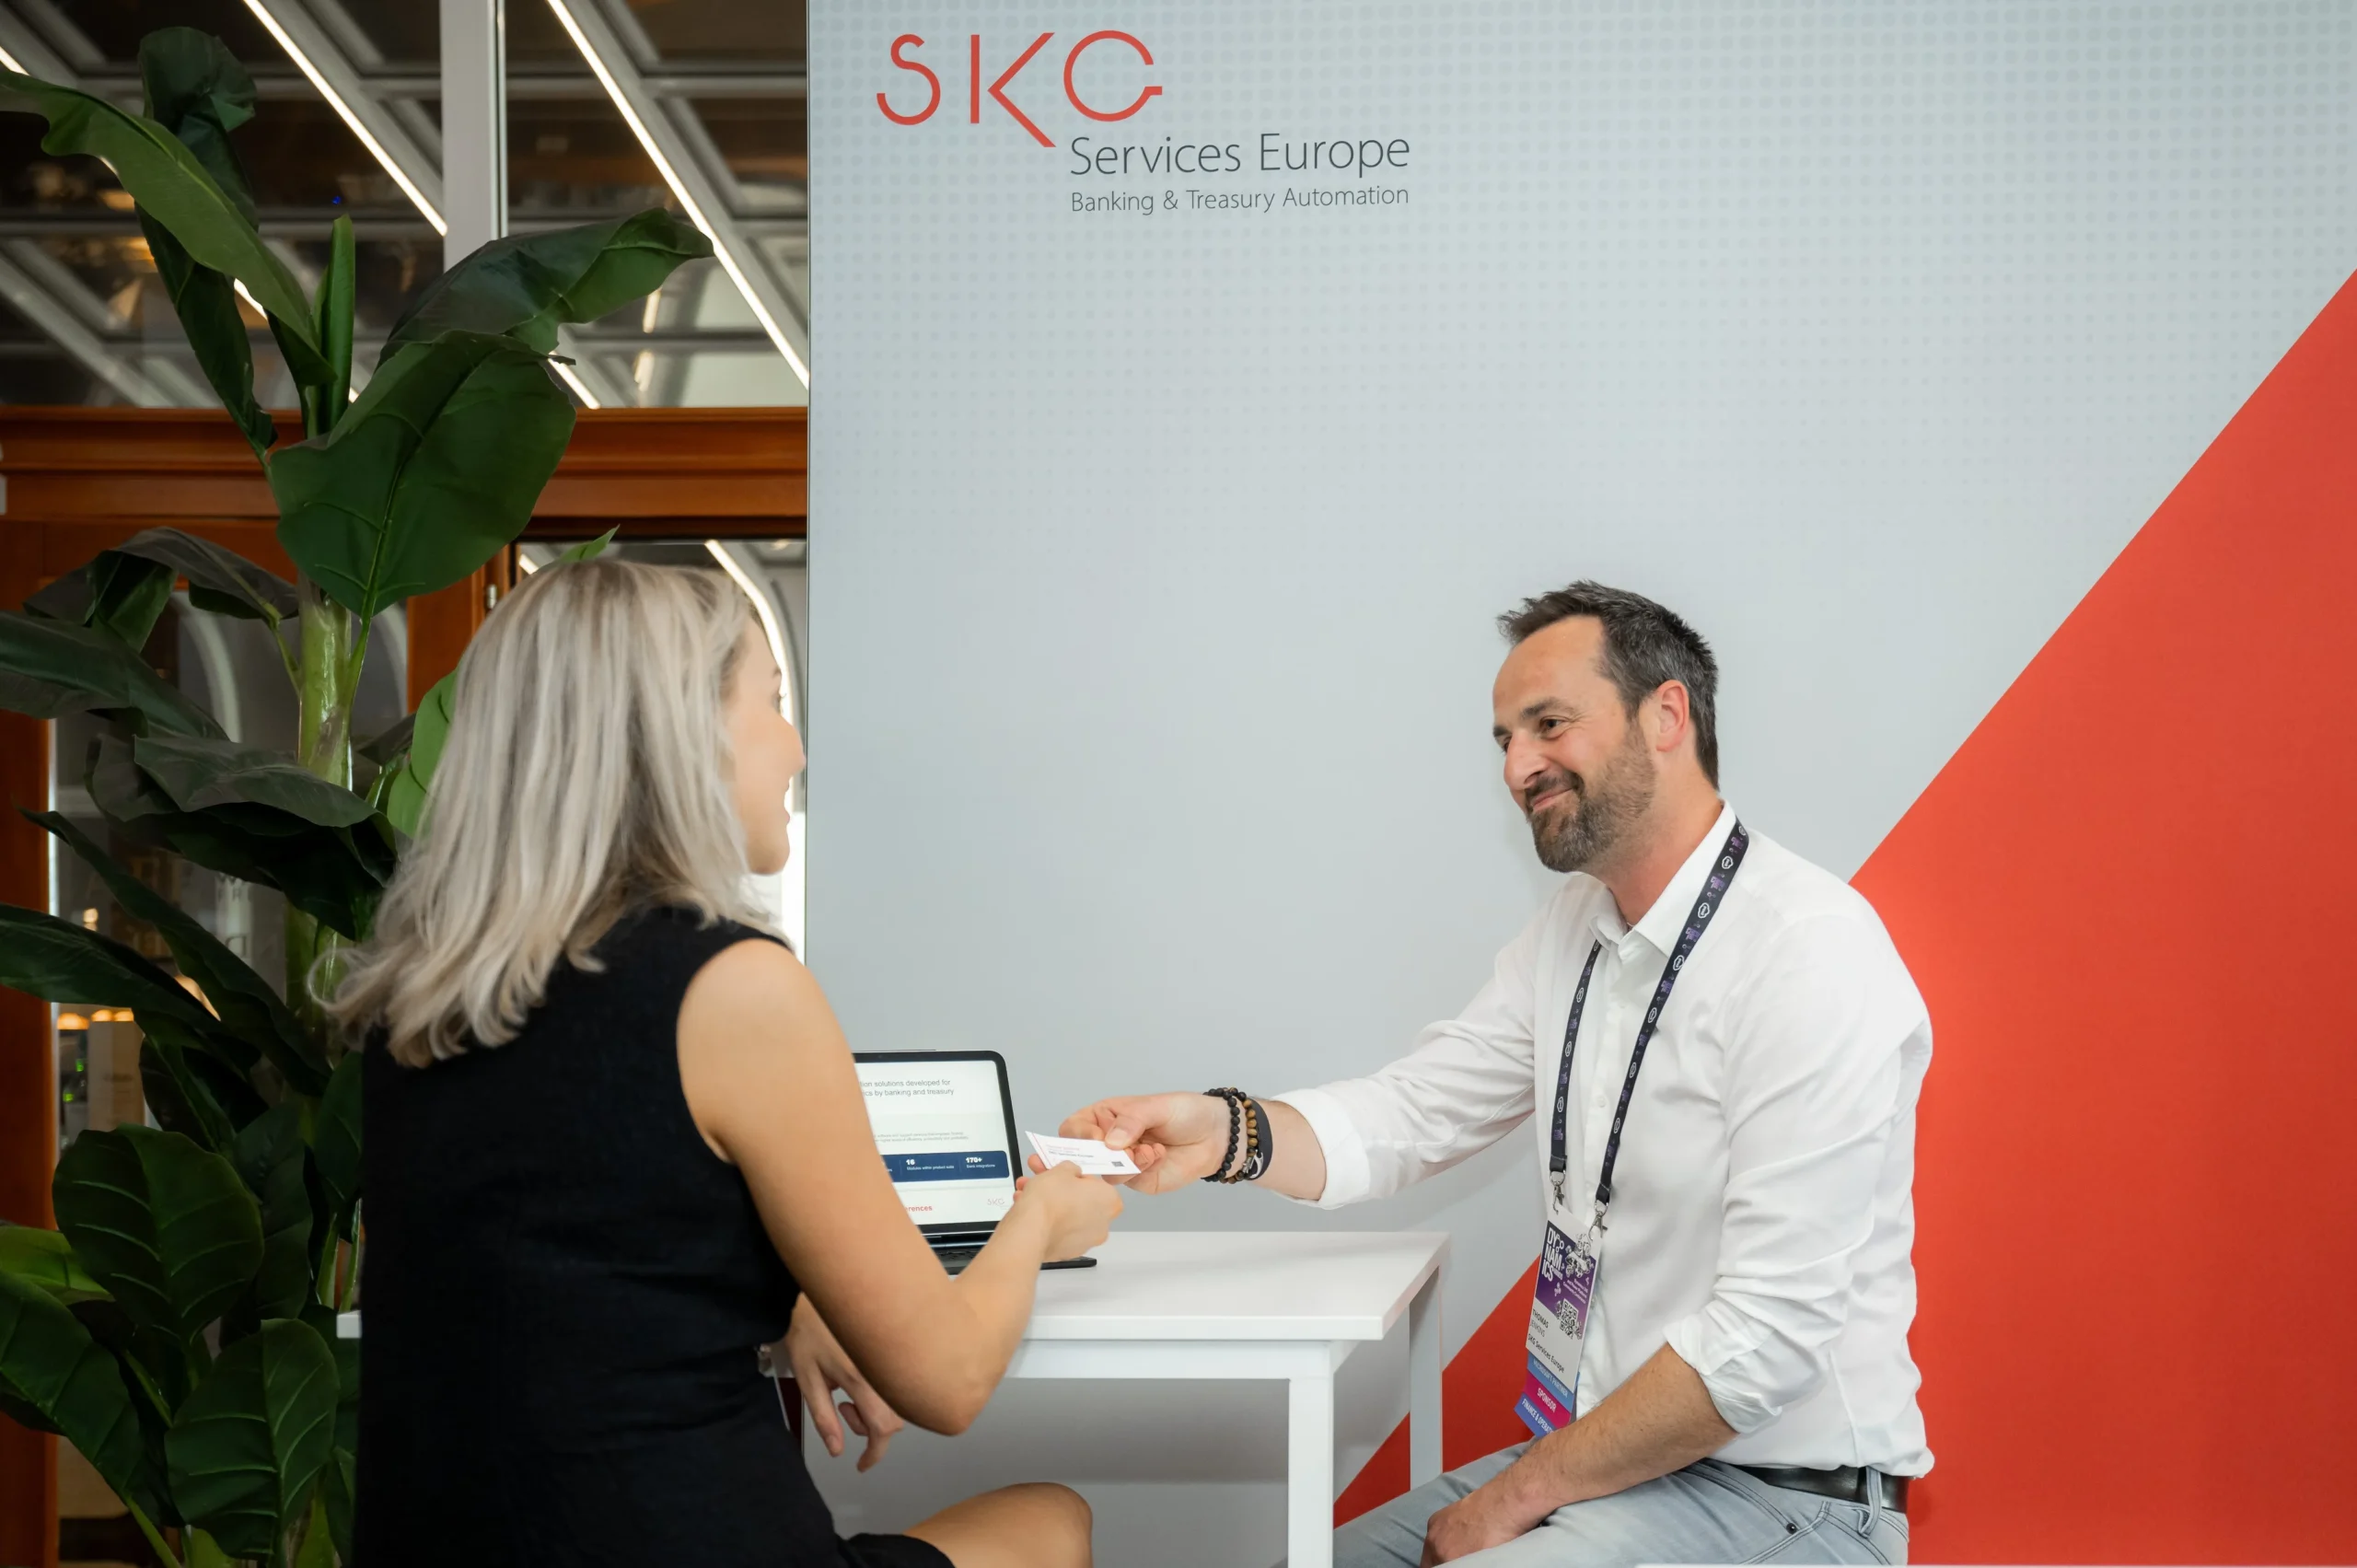 Meet SKG at EuroFinance